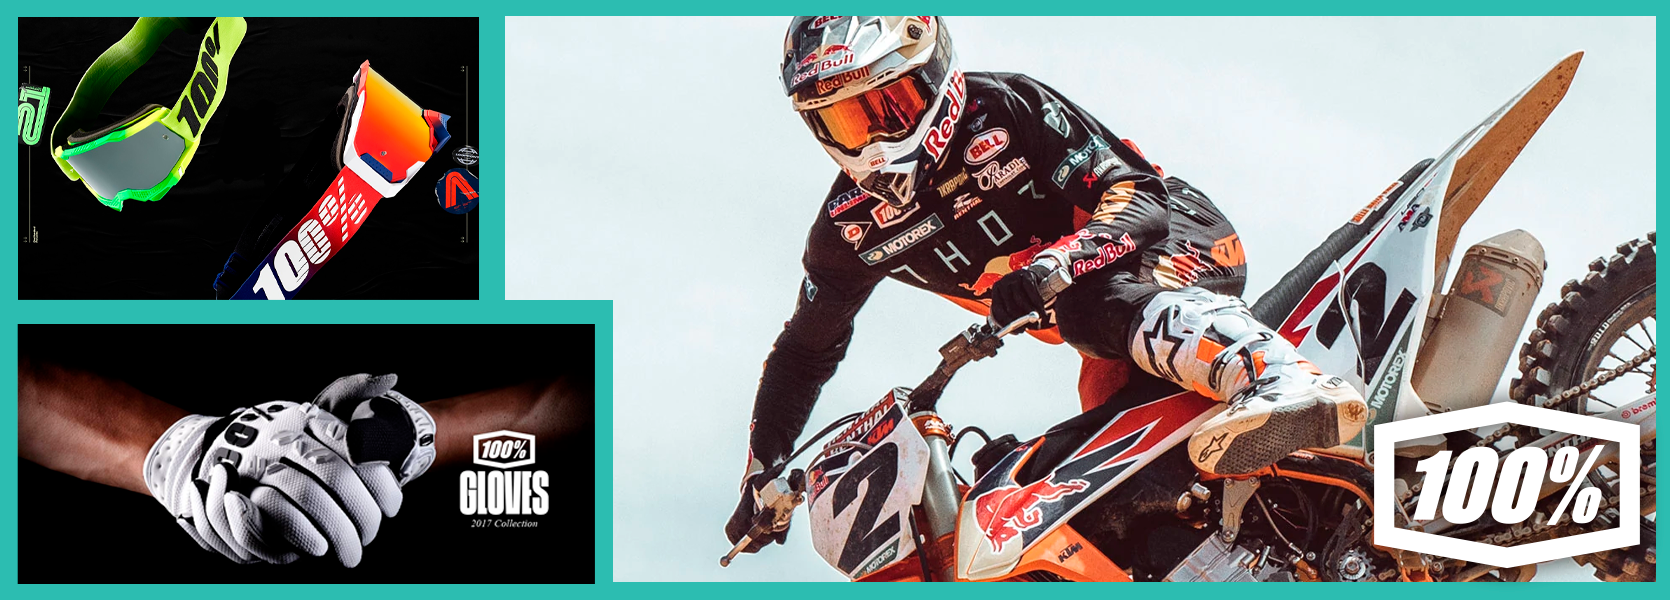 Gafas 100% Motocross - Makro Motos Store